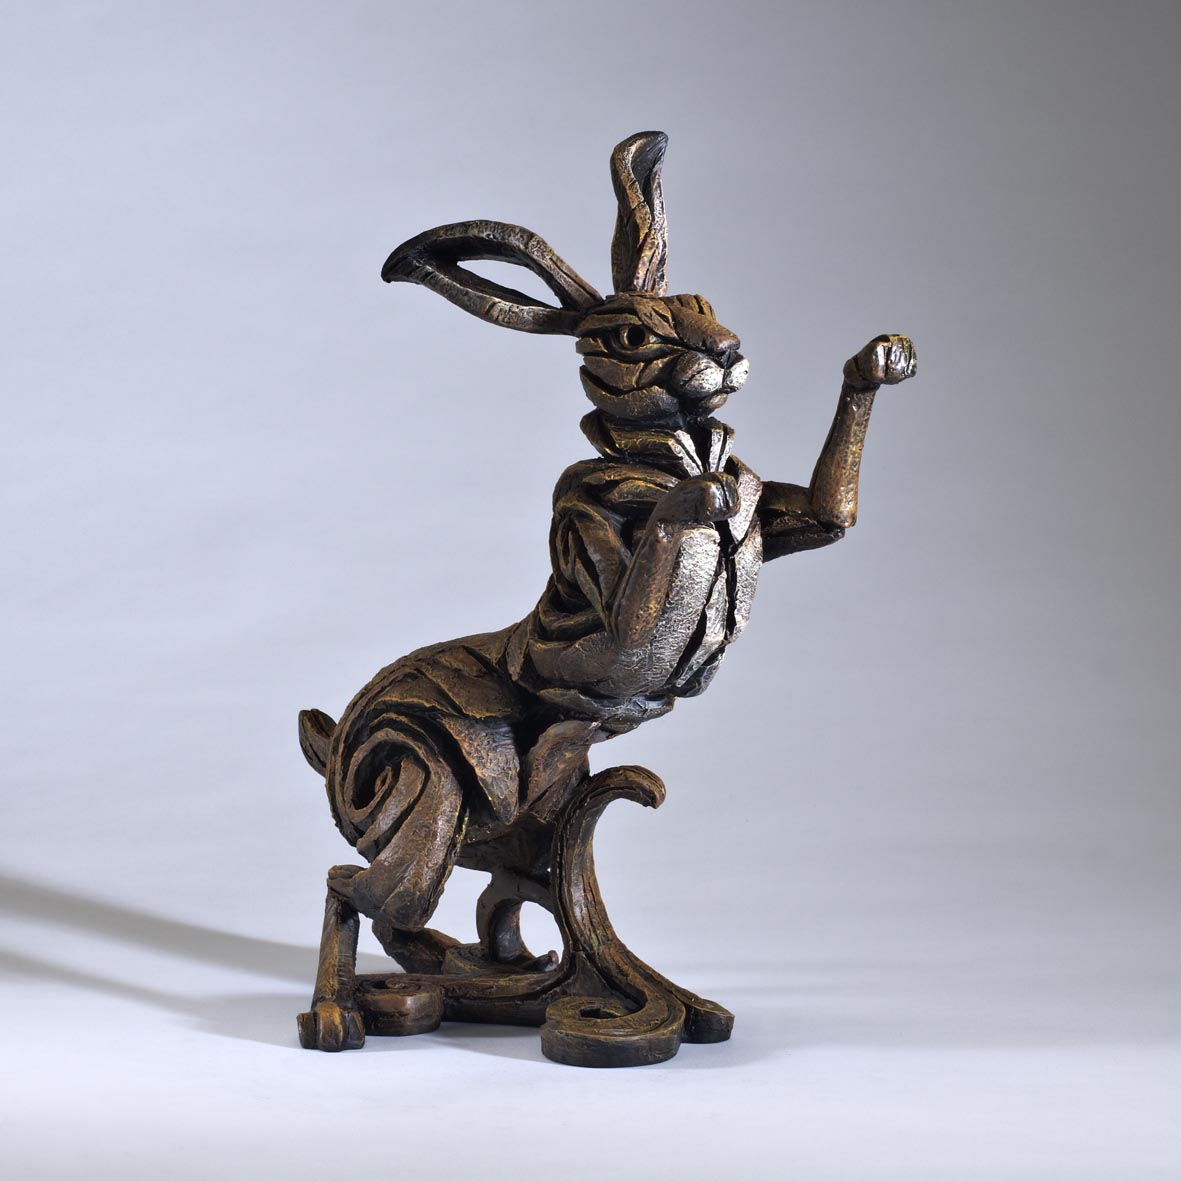 Hare Brown by Matt Buckley at Edge Sculpture